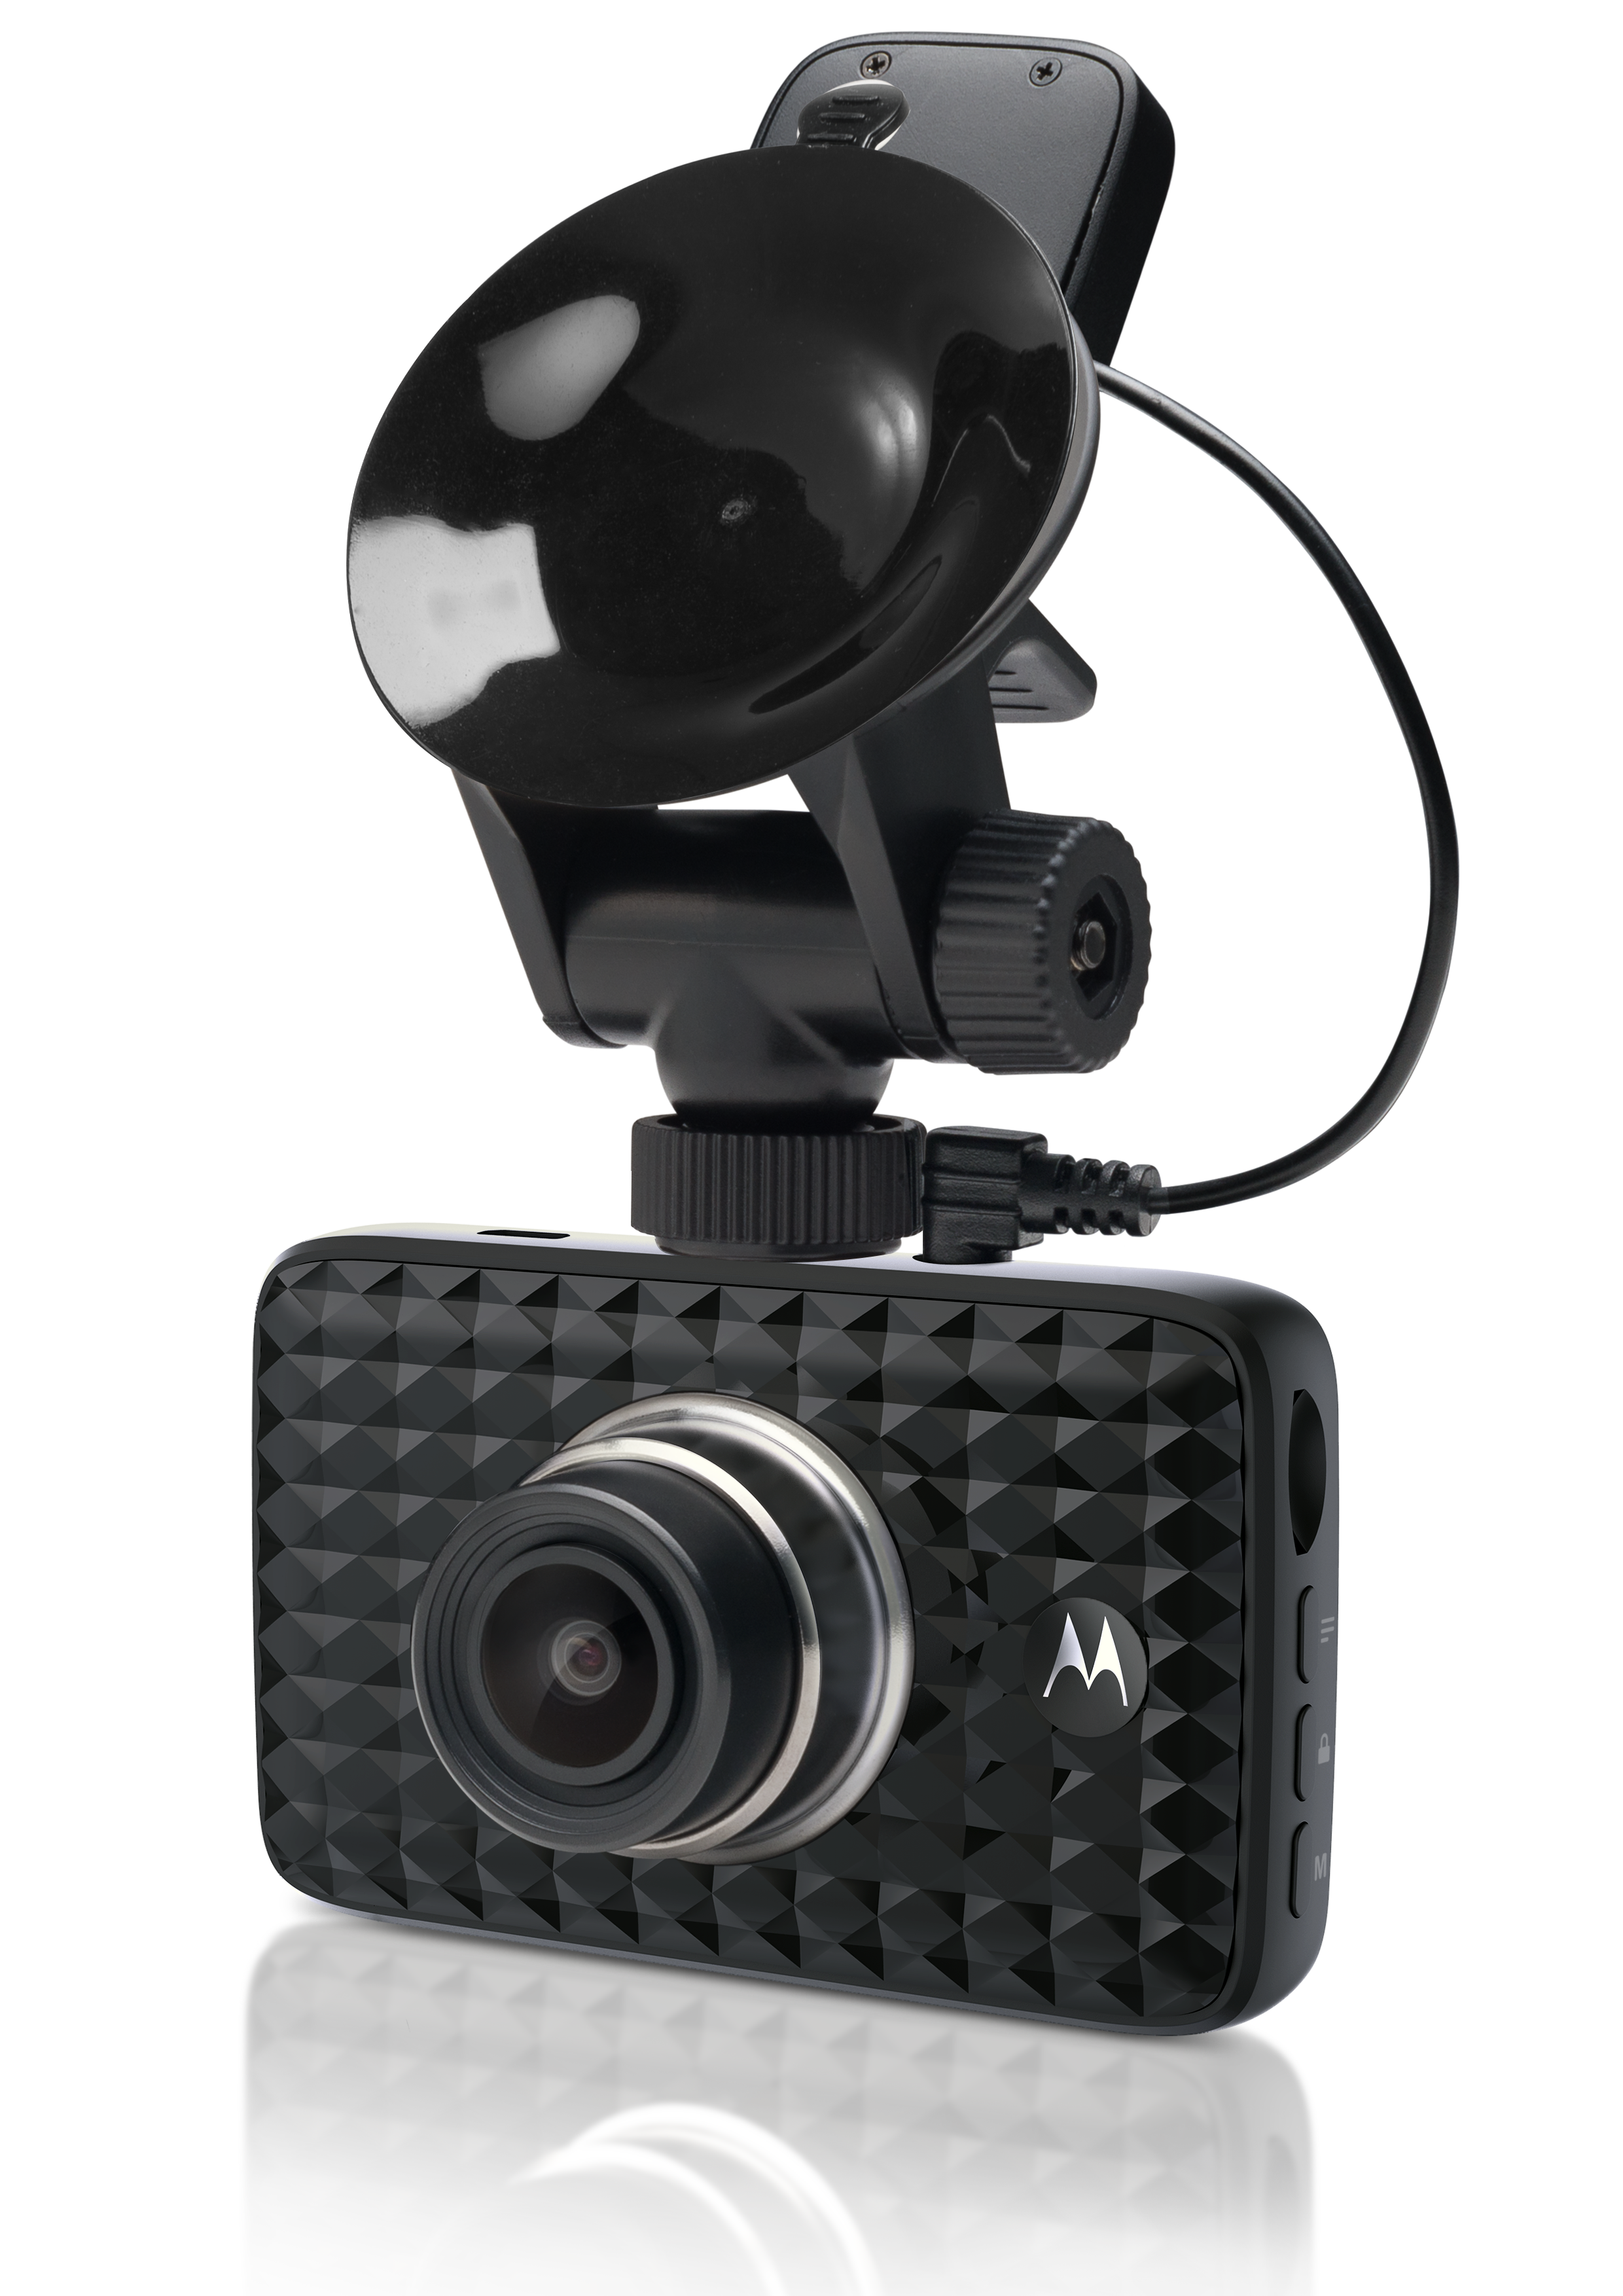 Motorola MDC300GW Dash Cam Full HD (1080p) Dash Camera with GPS and WiFi